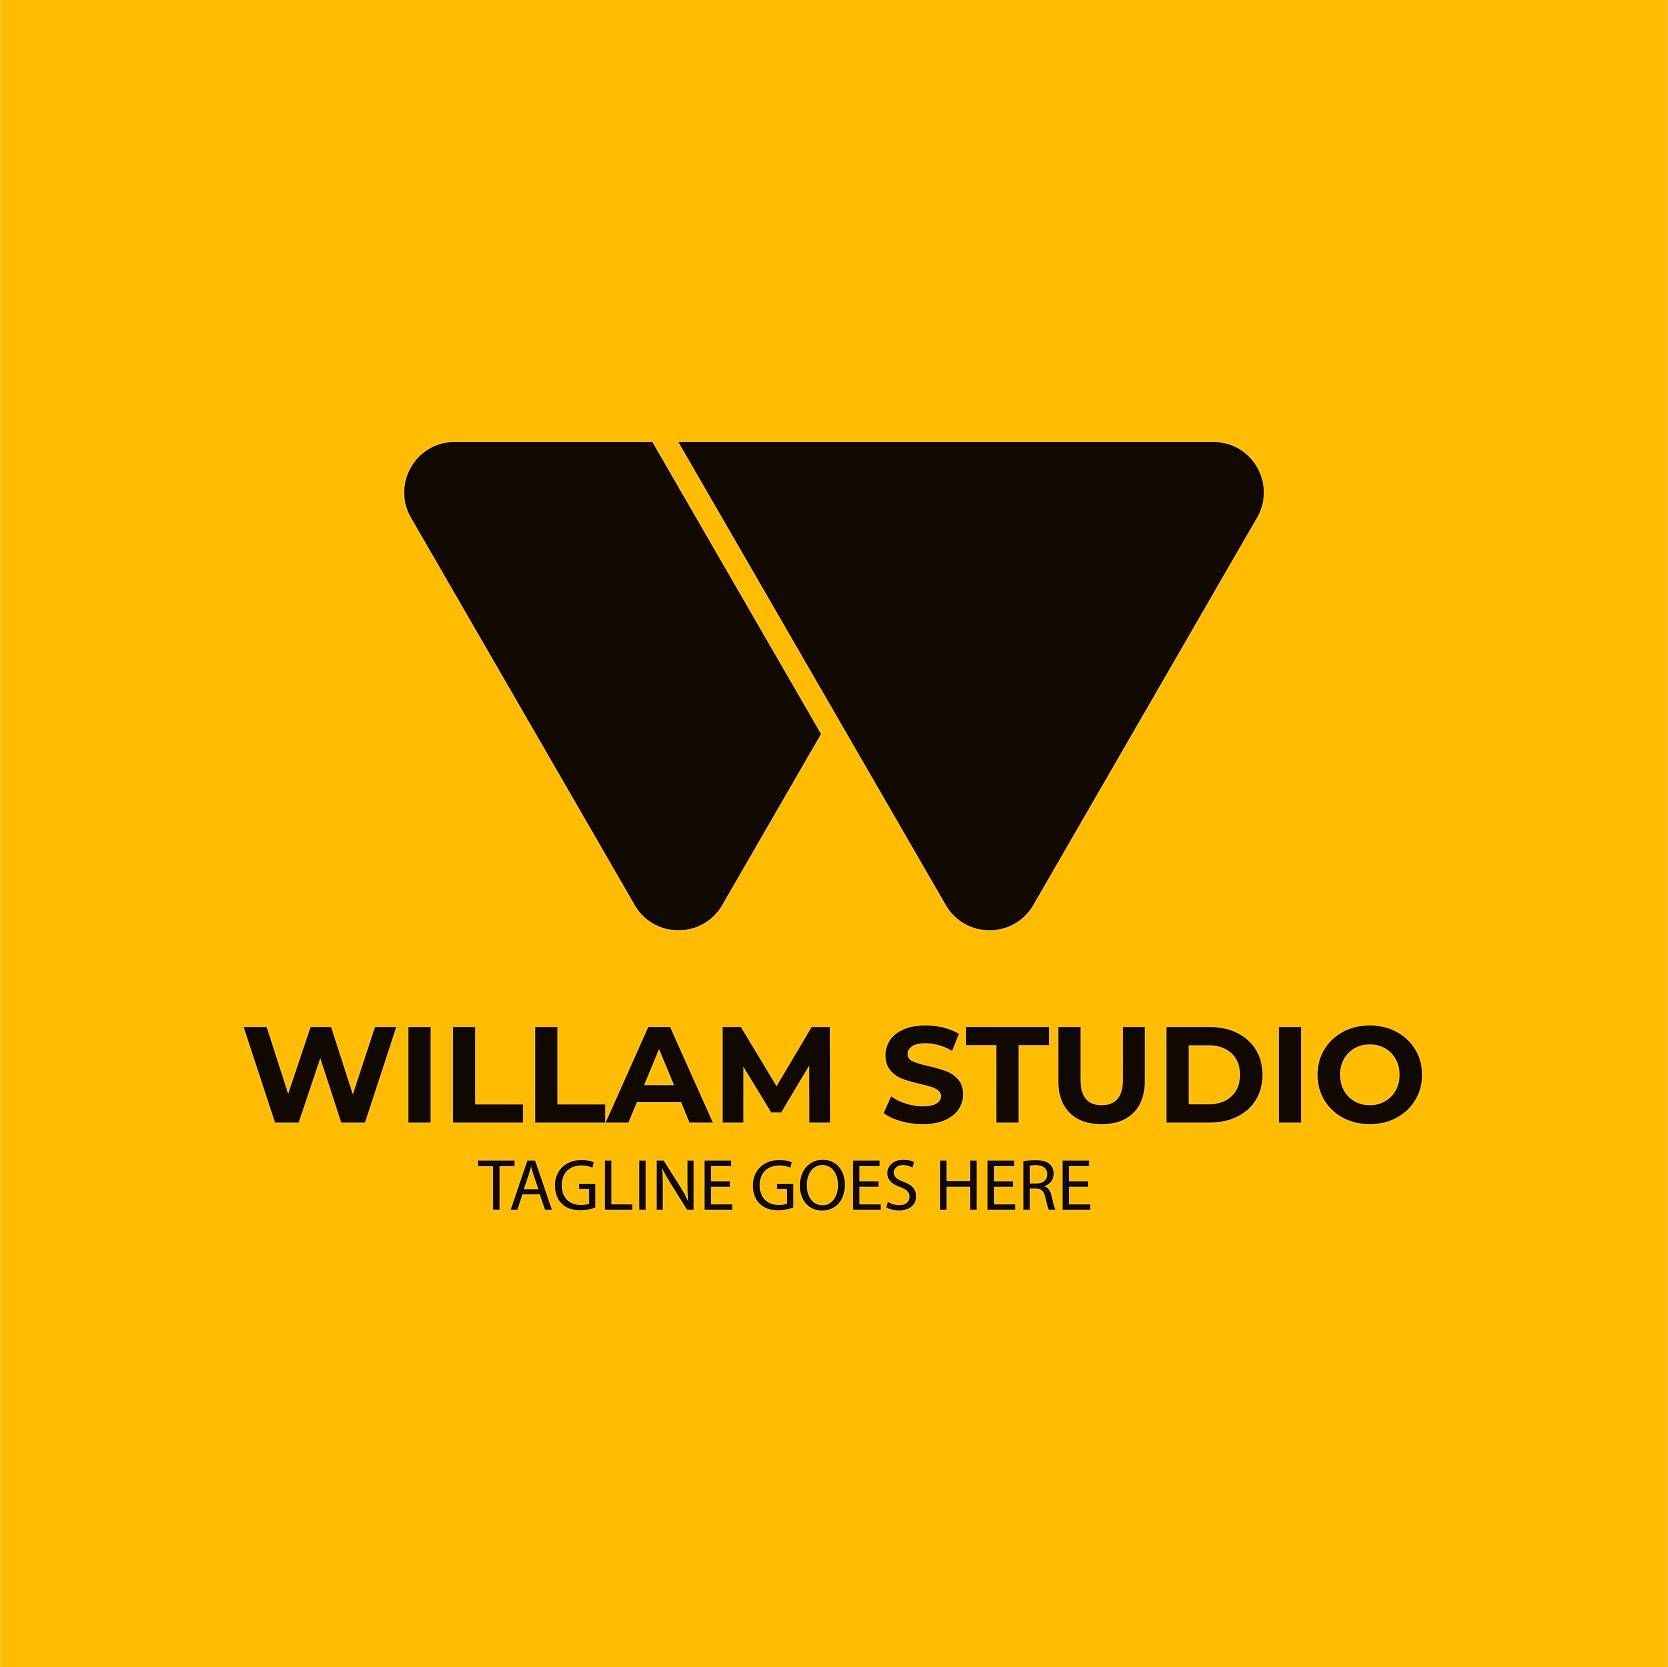 Willam studio logo design with w shape